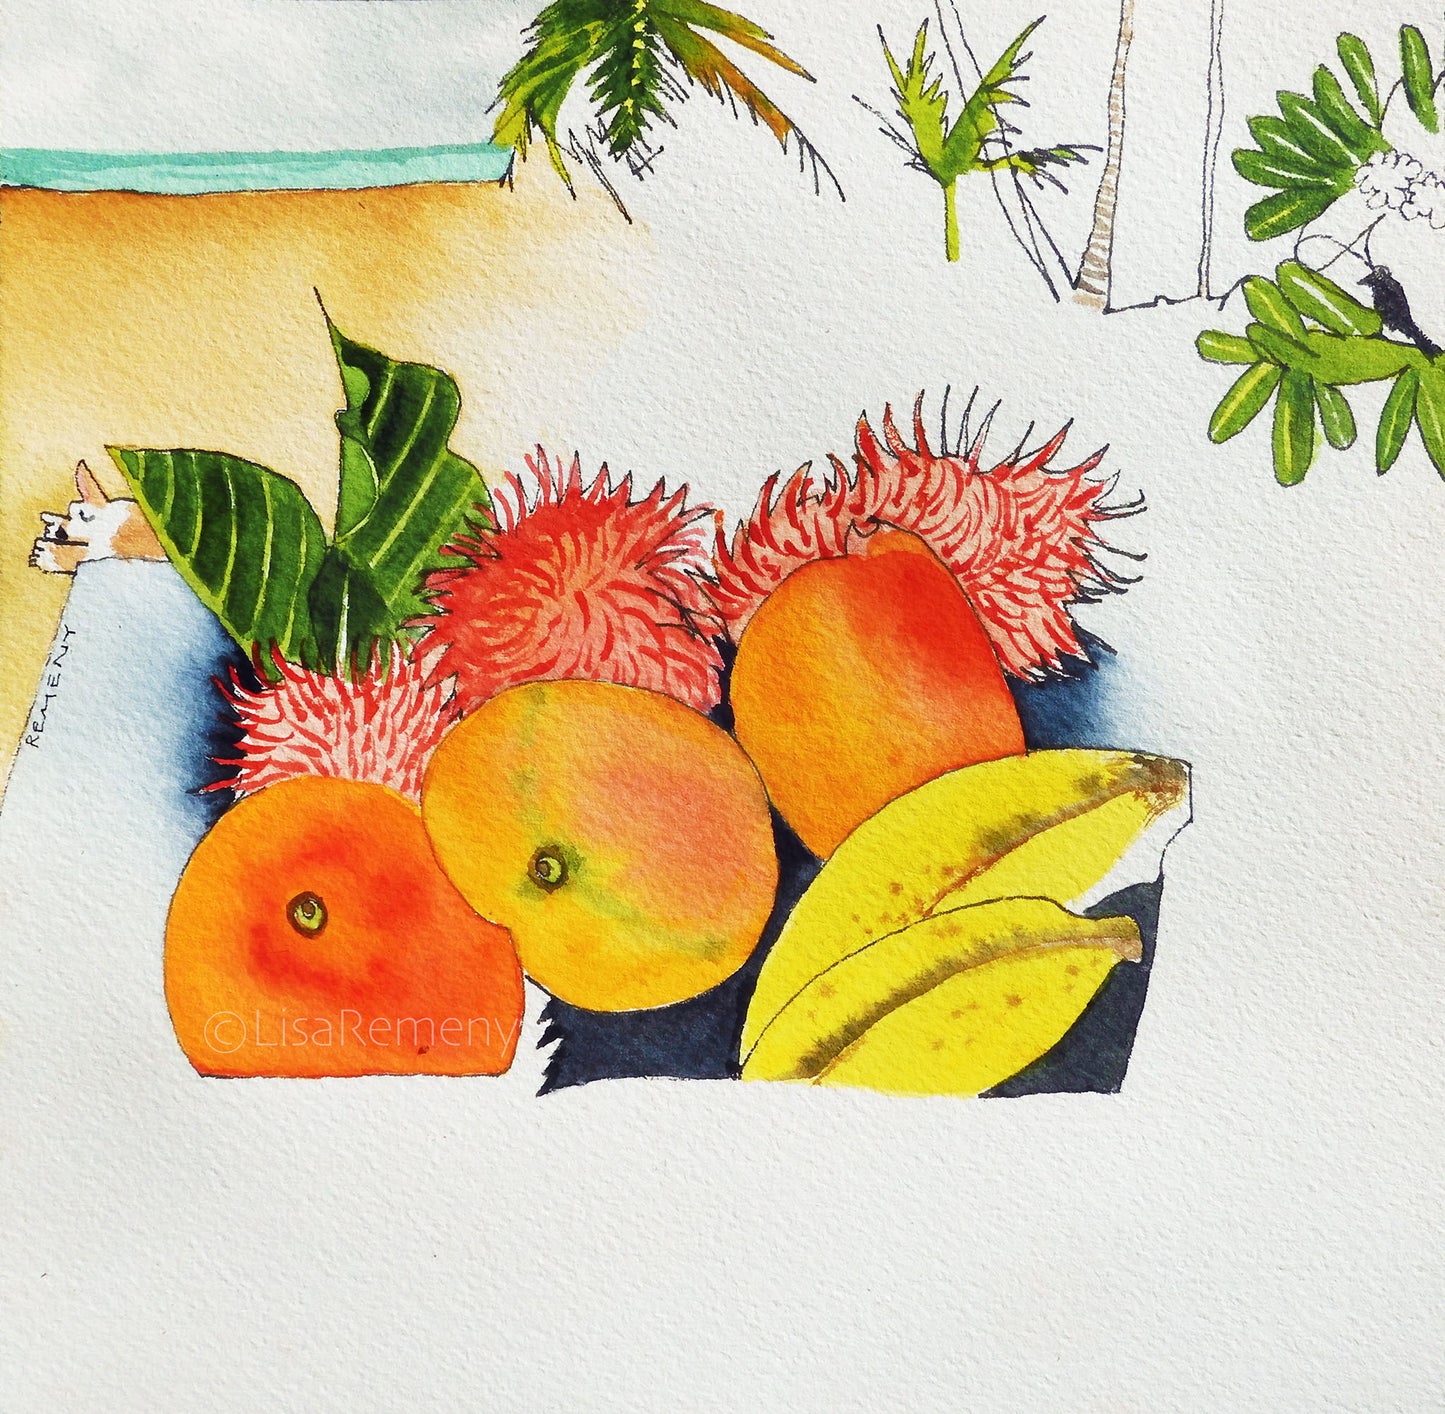 Watercolor & ink on Paper - Fruits on Negombo Beach, Sri Lanka